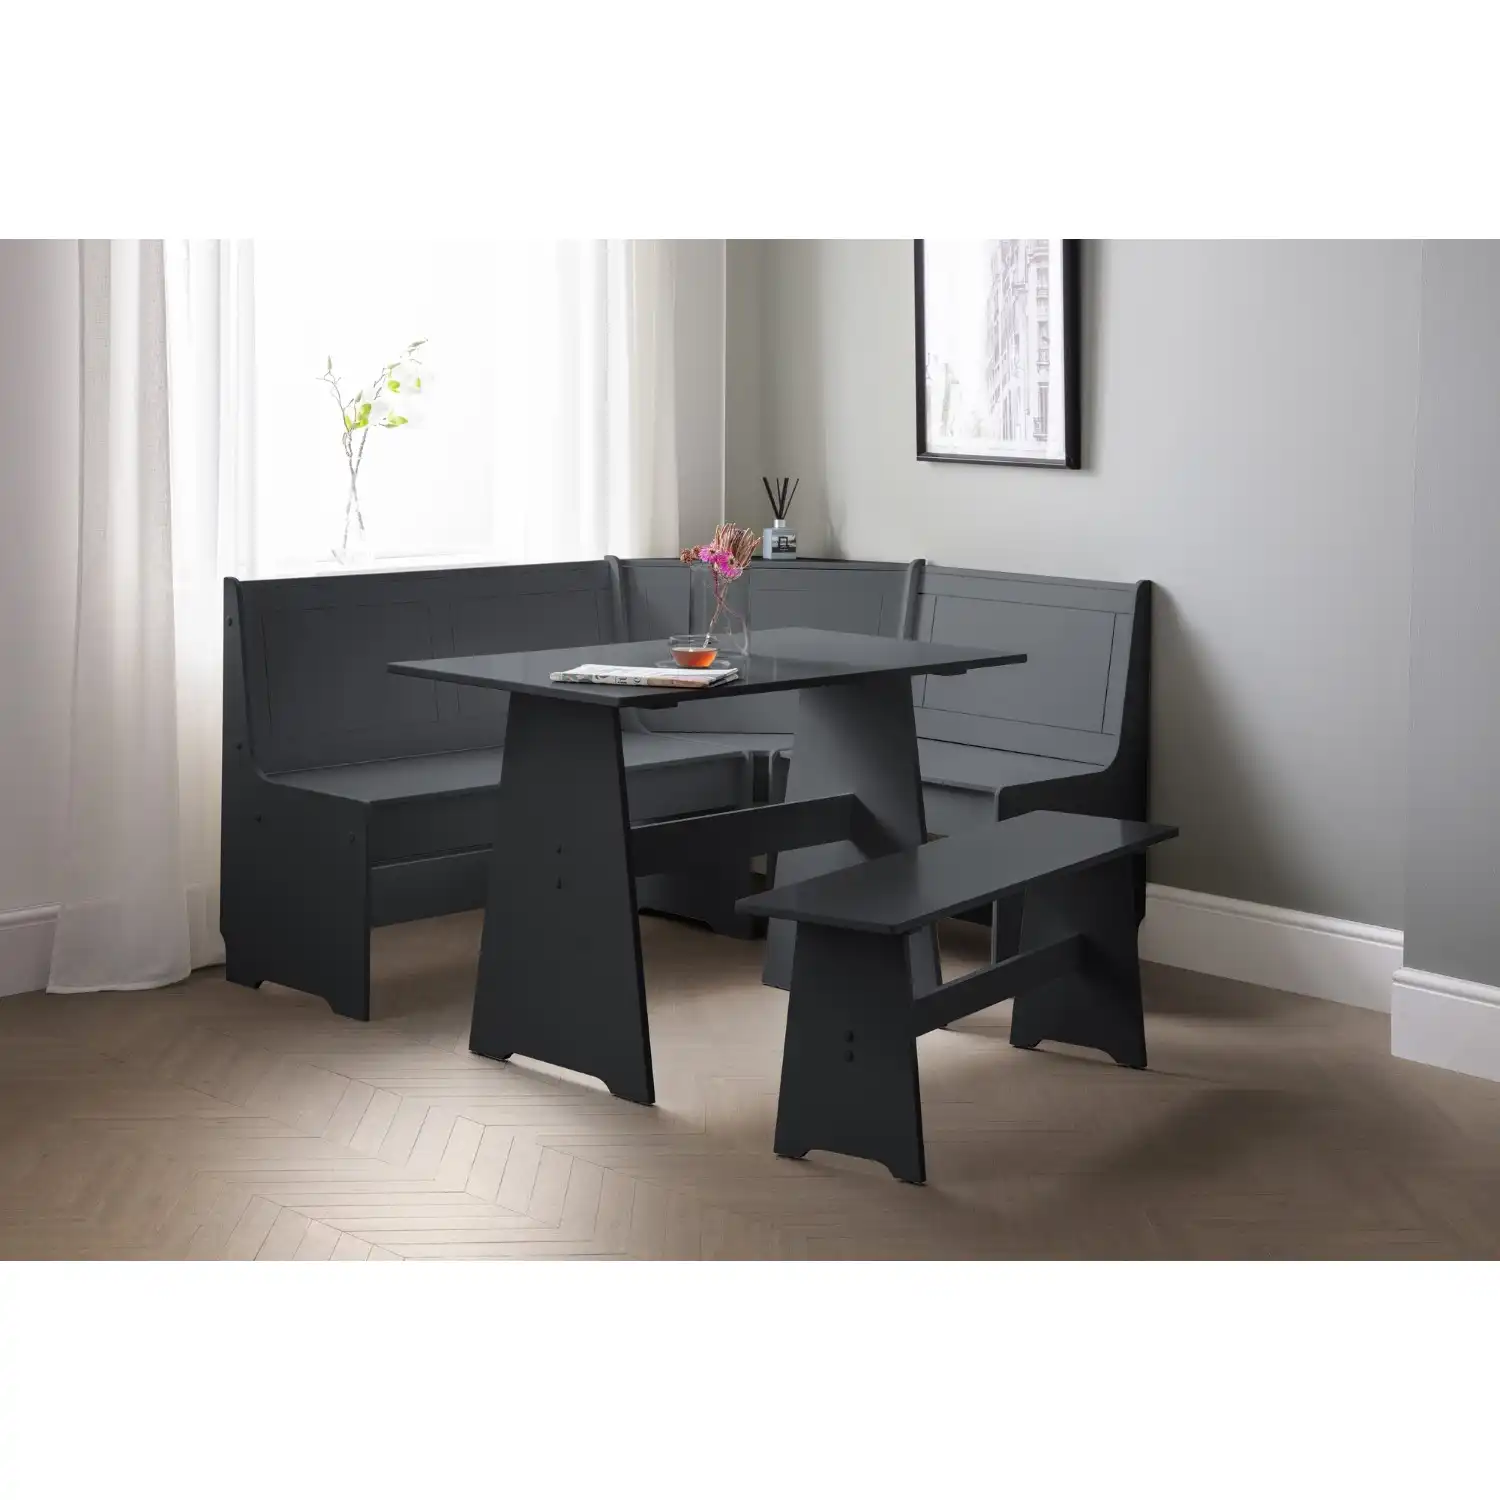 Slim Compact Grey Corner Dining Table Set with Storage Corner Bench